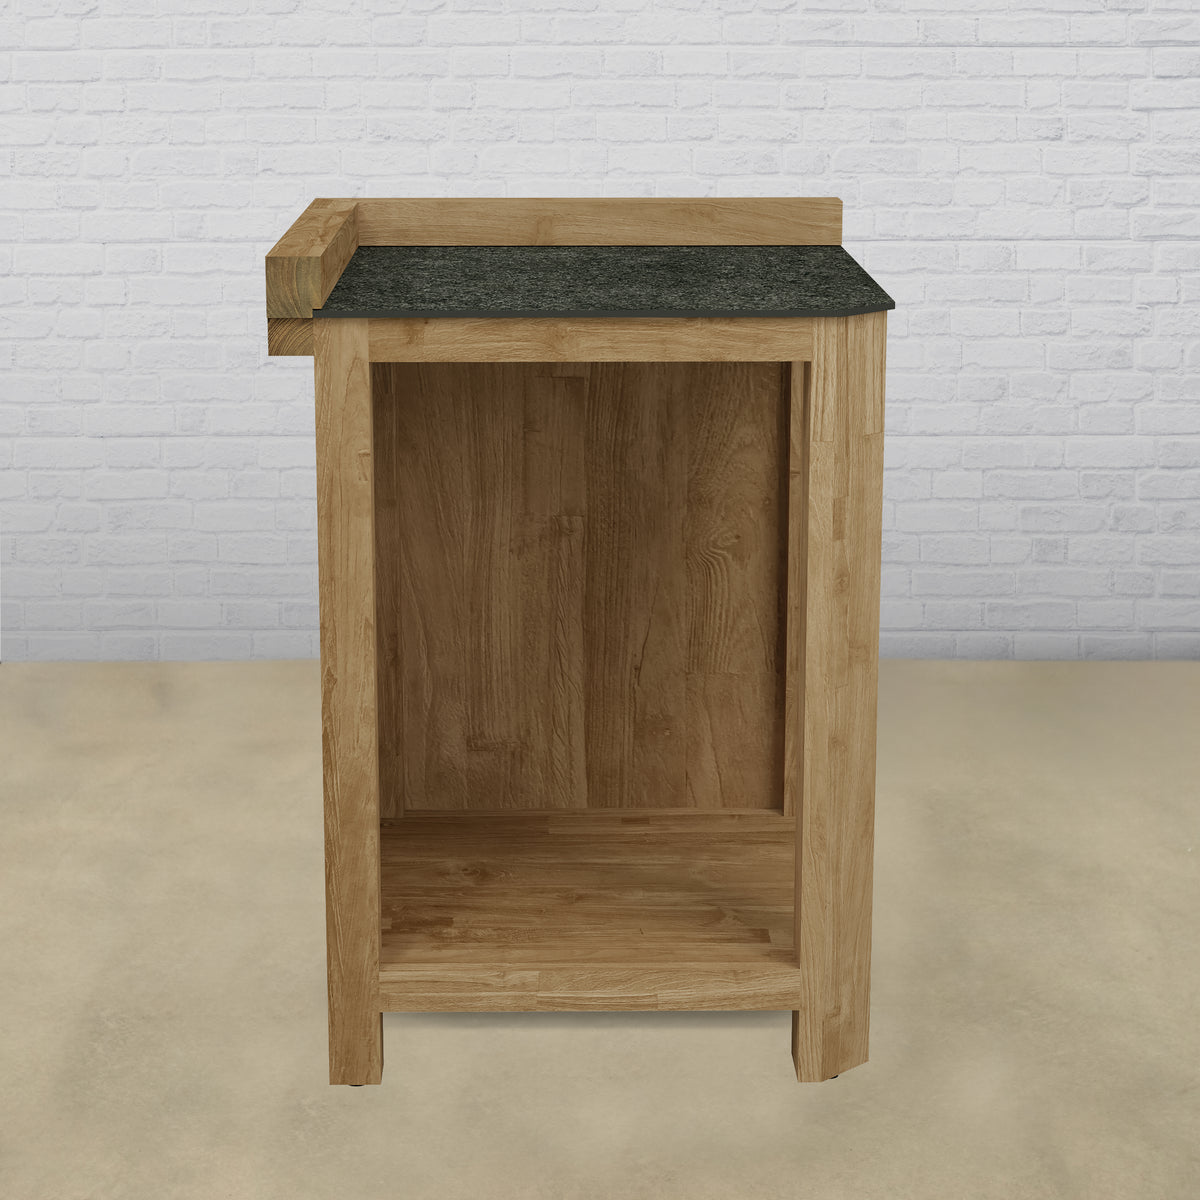 Draco Grills Teak Modular Outdoor Kitchen 90 Degree Corner Cabinet with Ceramic Top